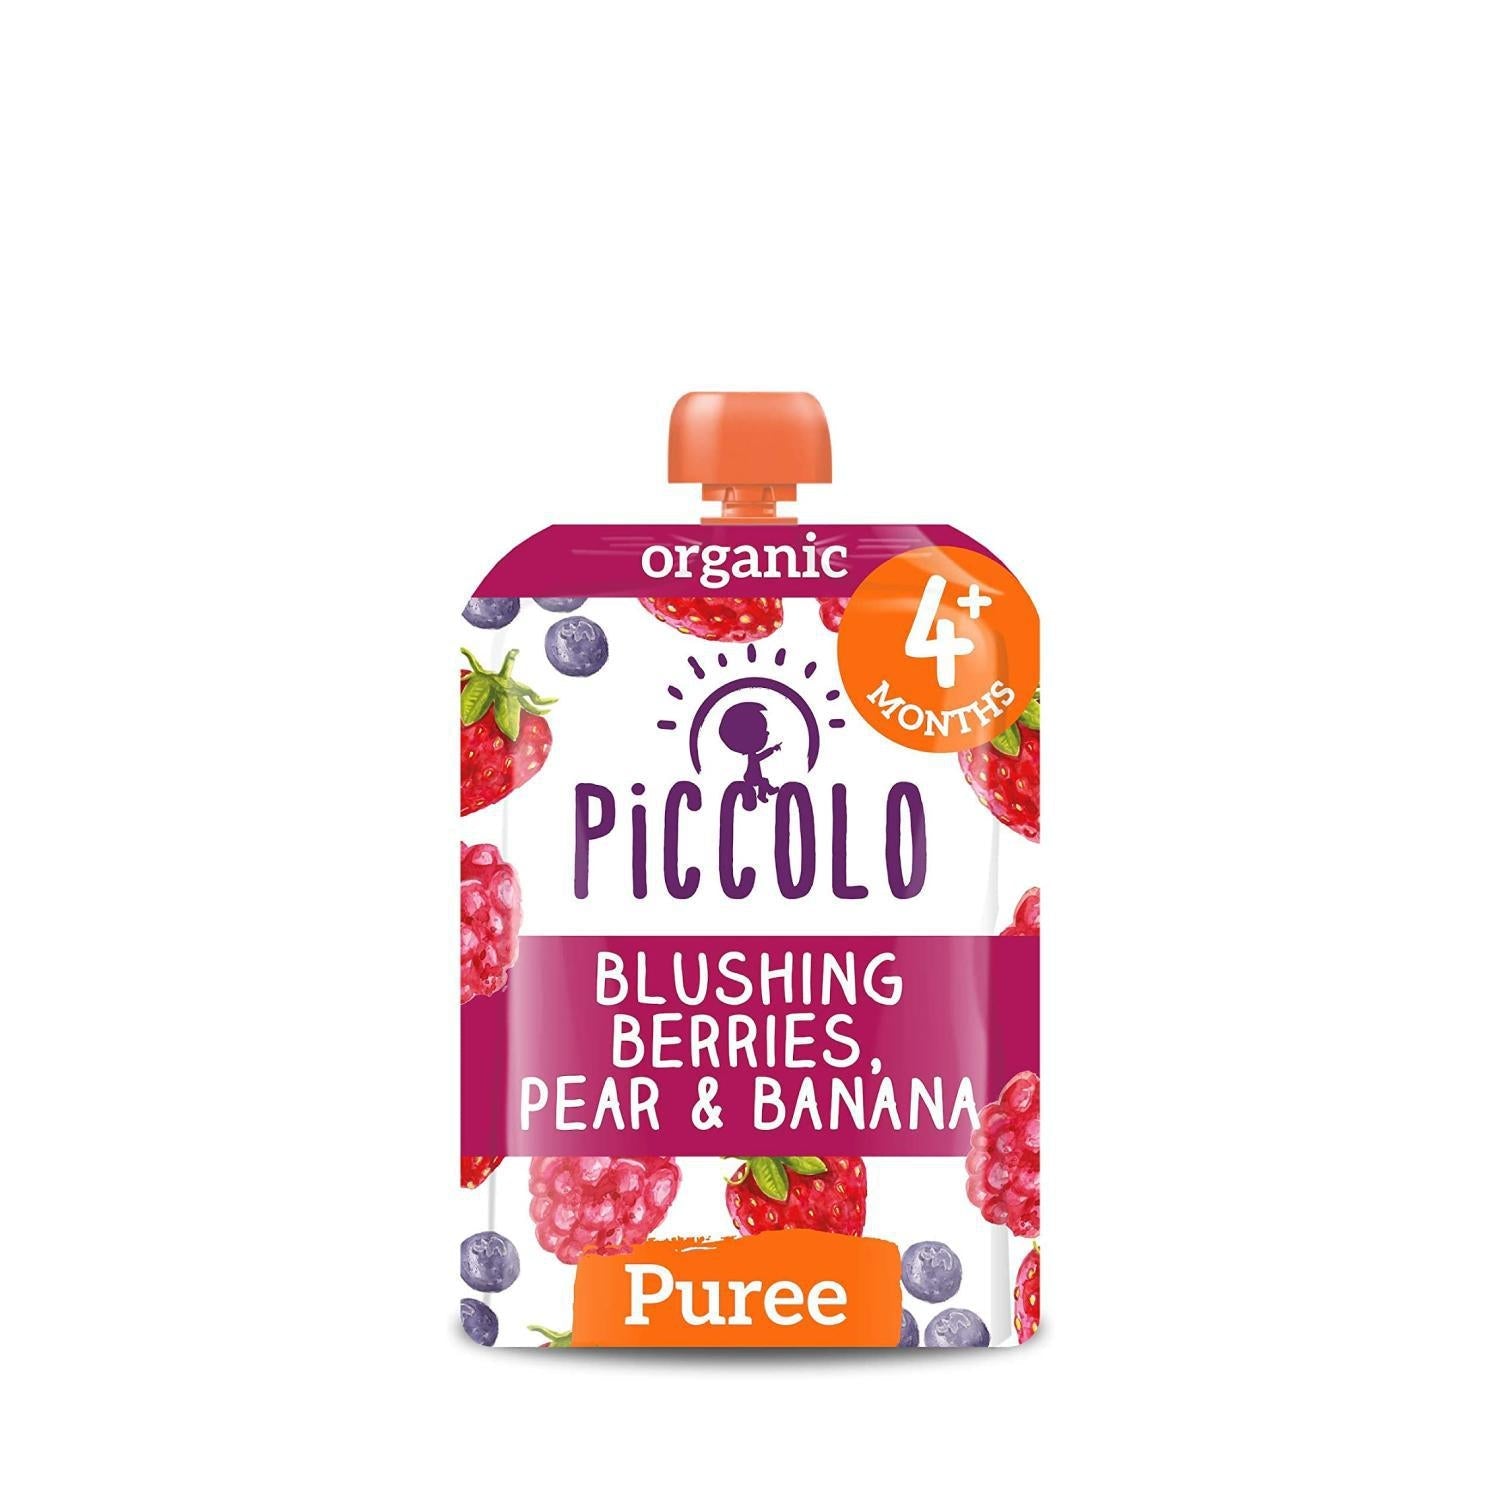 Piccolo - Blushing Berries